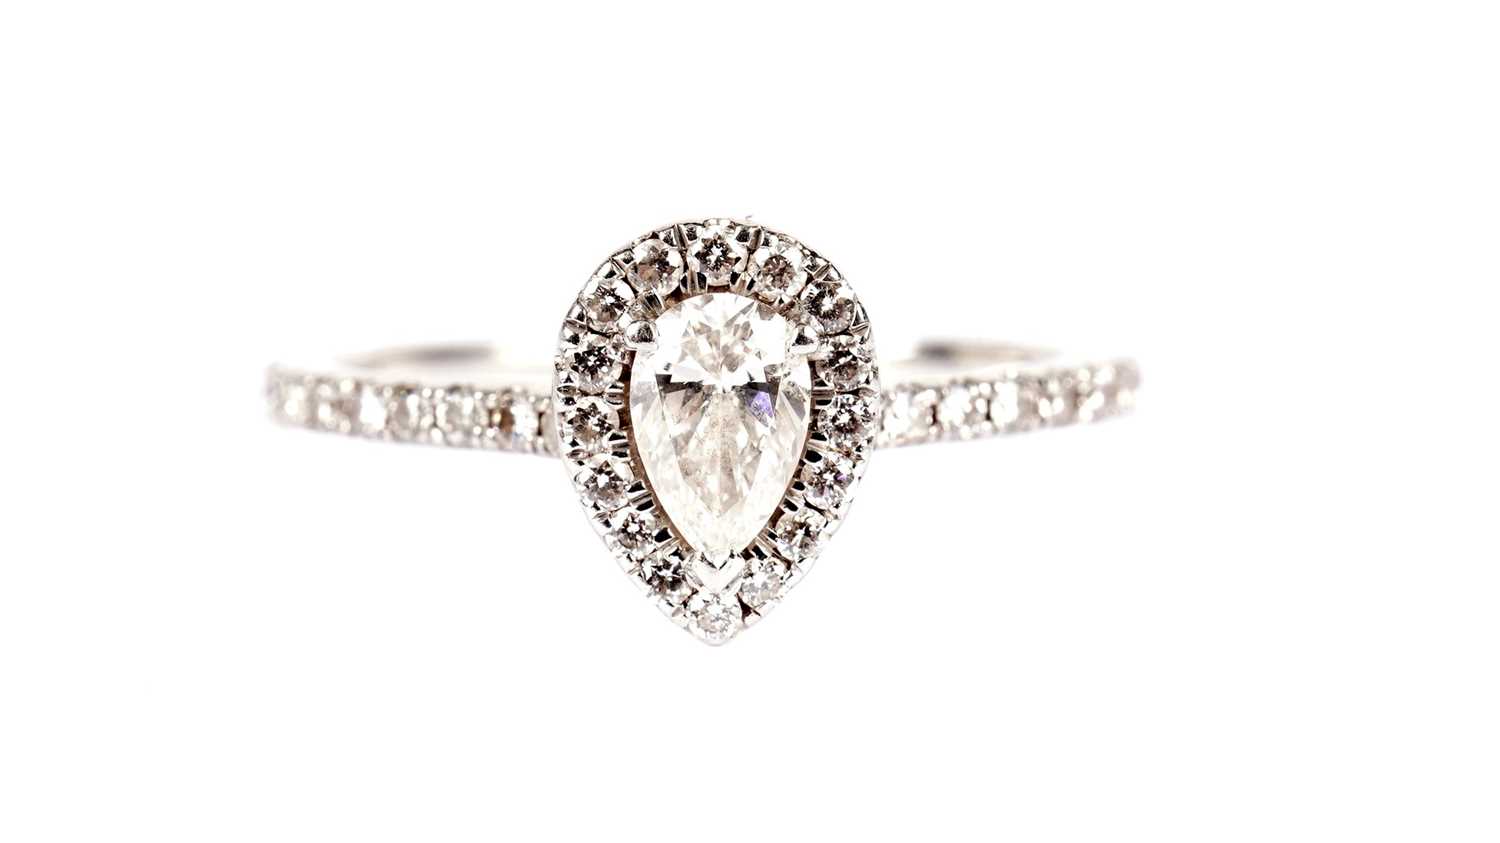 A contemporary Rox single stone diamond ring